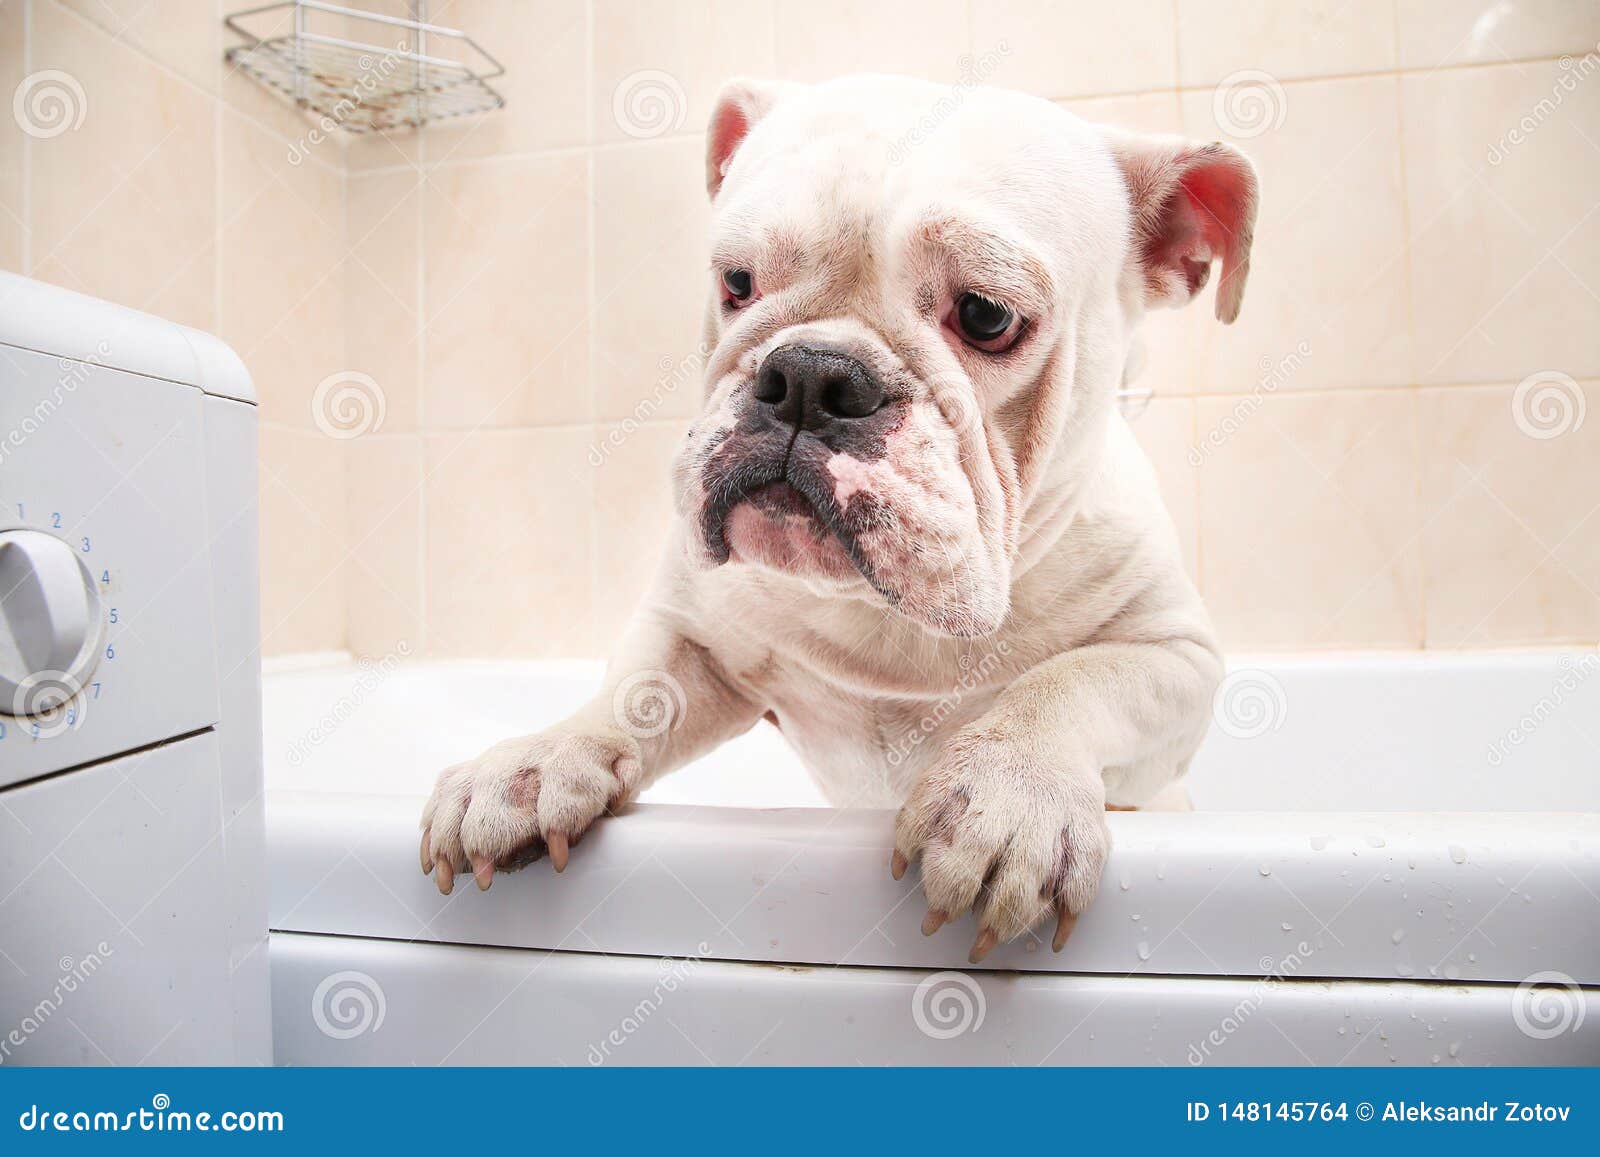 Bathing Of The English Bulldog. Dog Taking A Bubble Bath